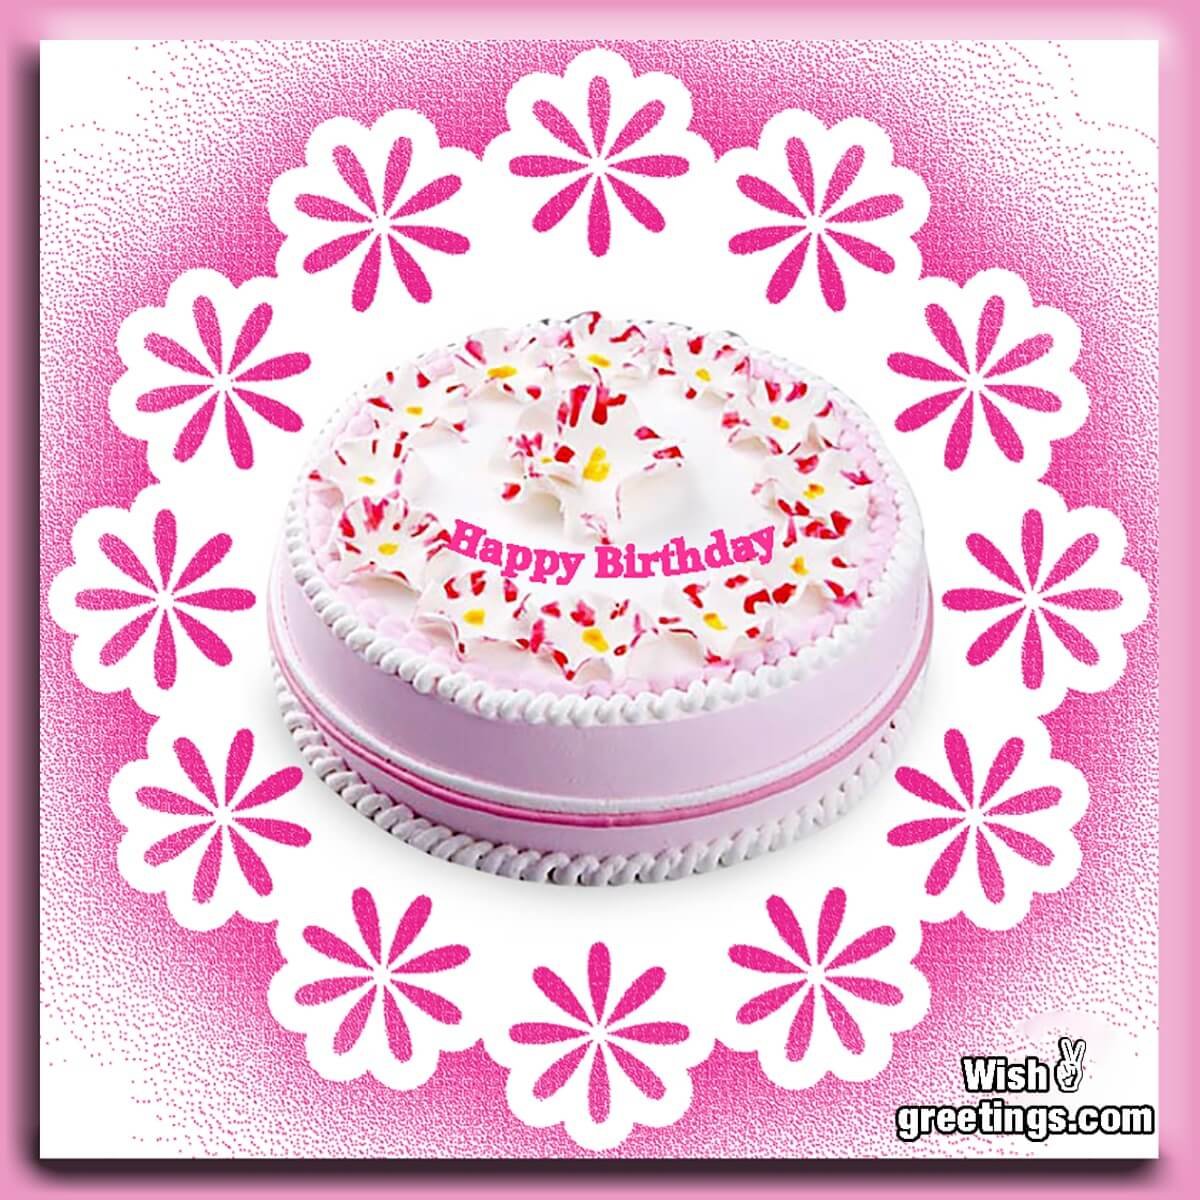 Happy Birthday Pink Round Cake